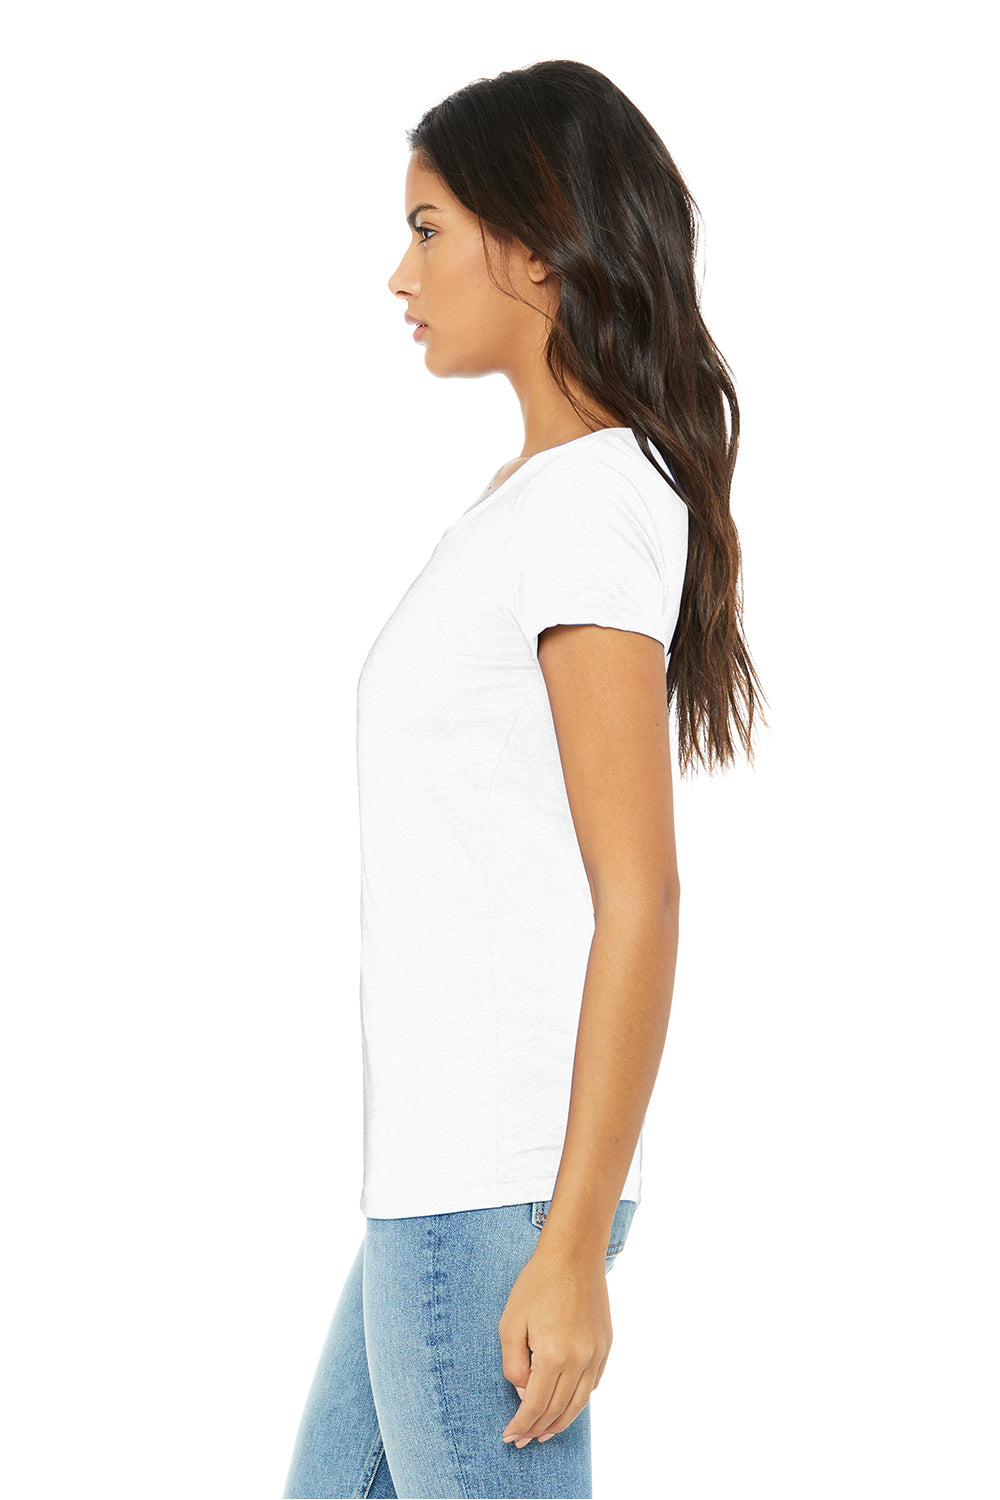 Bella + Canvas BC8413/B8413/8413 Womens Short Sleeve Crewneck T-Shirt Solid White Model Side